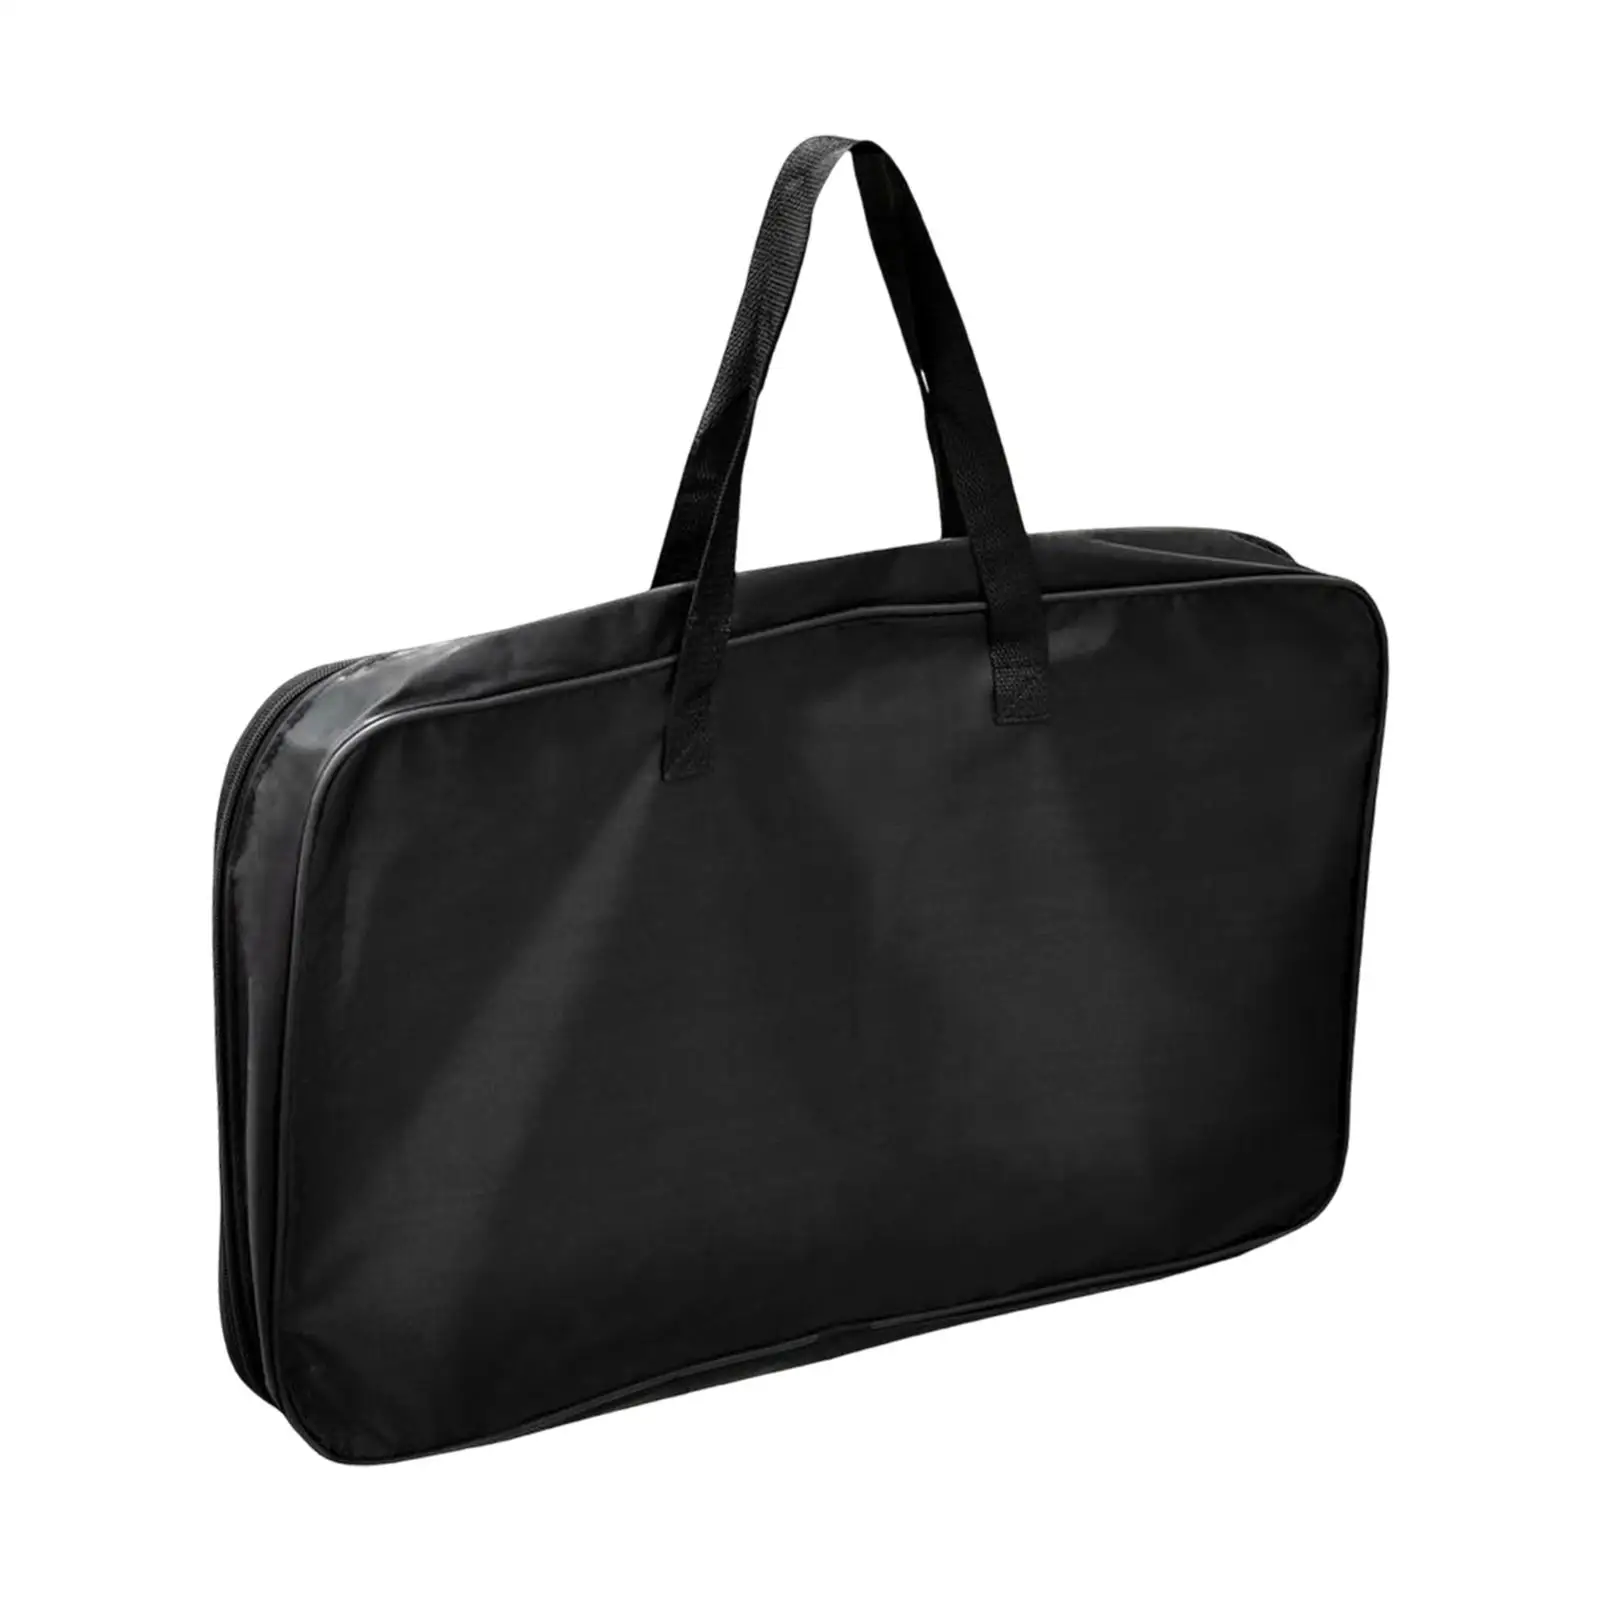 Accordion Gig Bag Thick Padded Storage Bag Durable Carrying Bag for 120 Bass